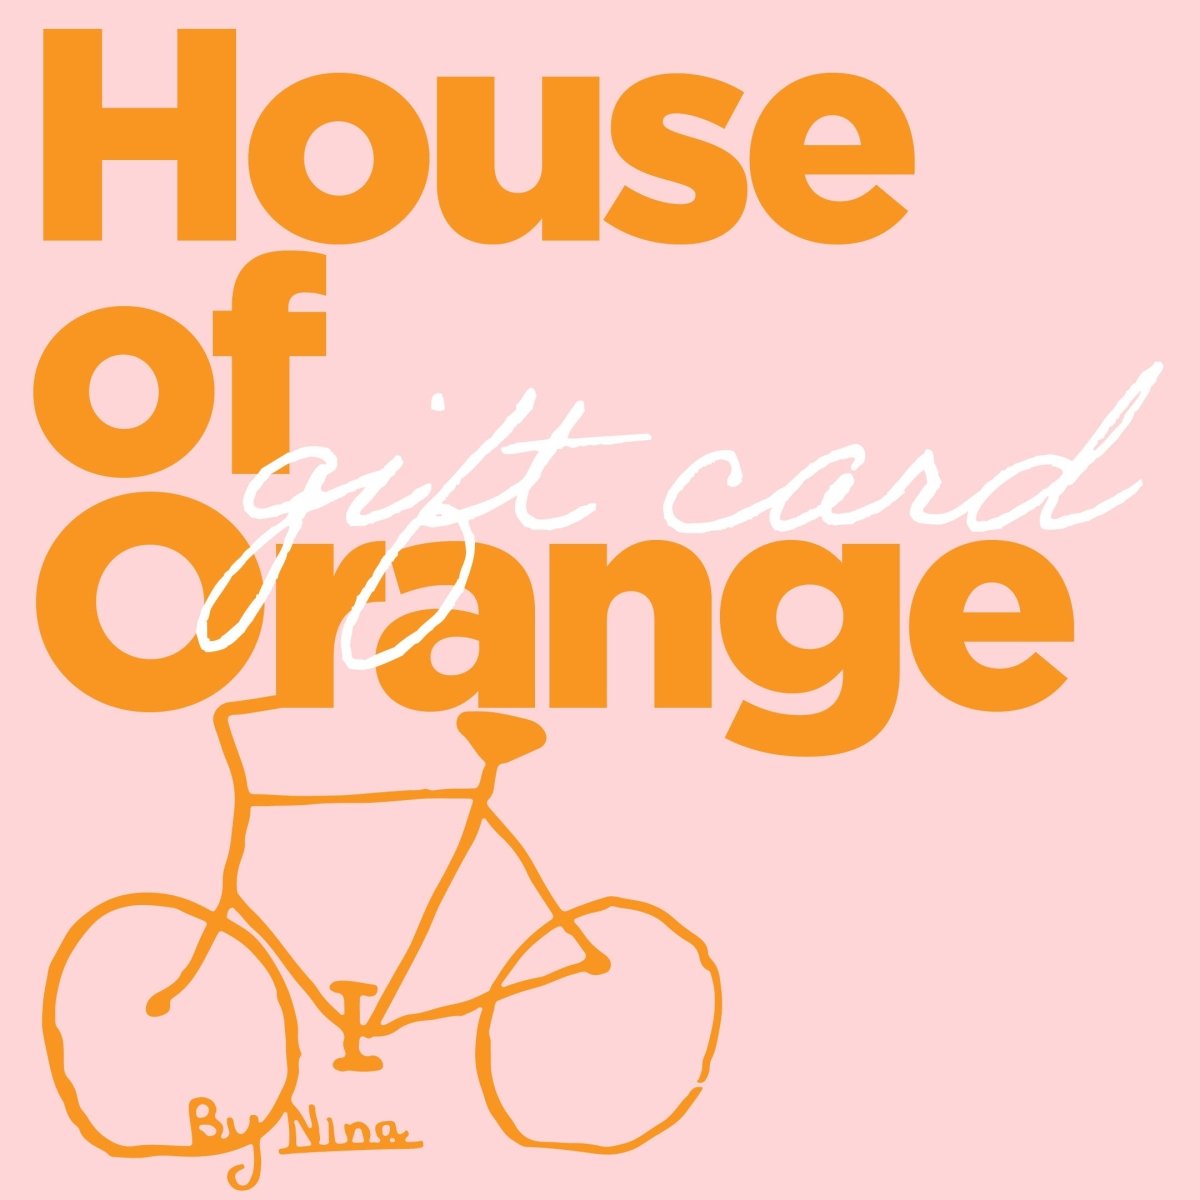 Gift Card / Voucher - House of Orange